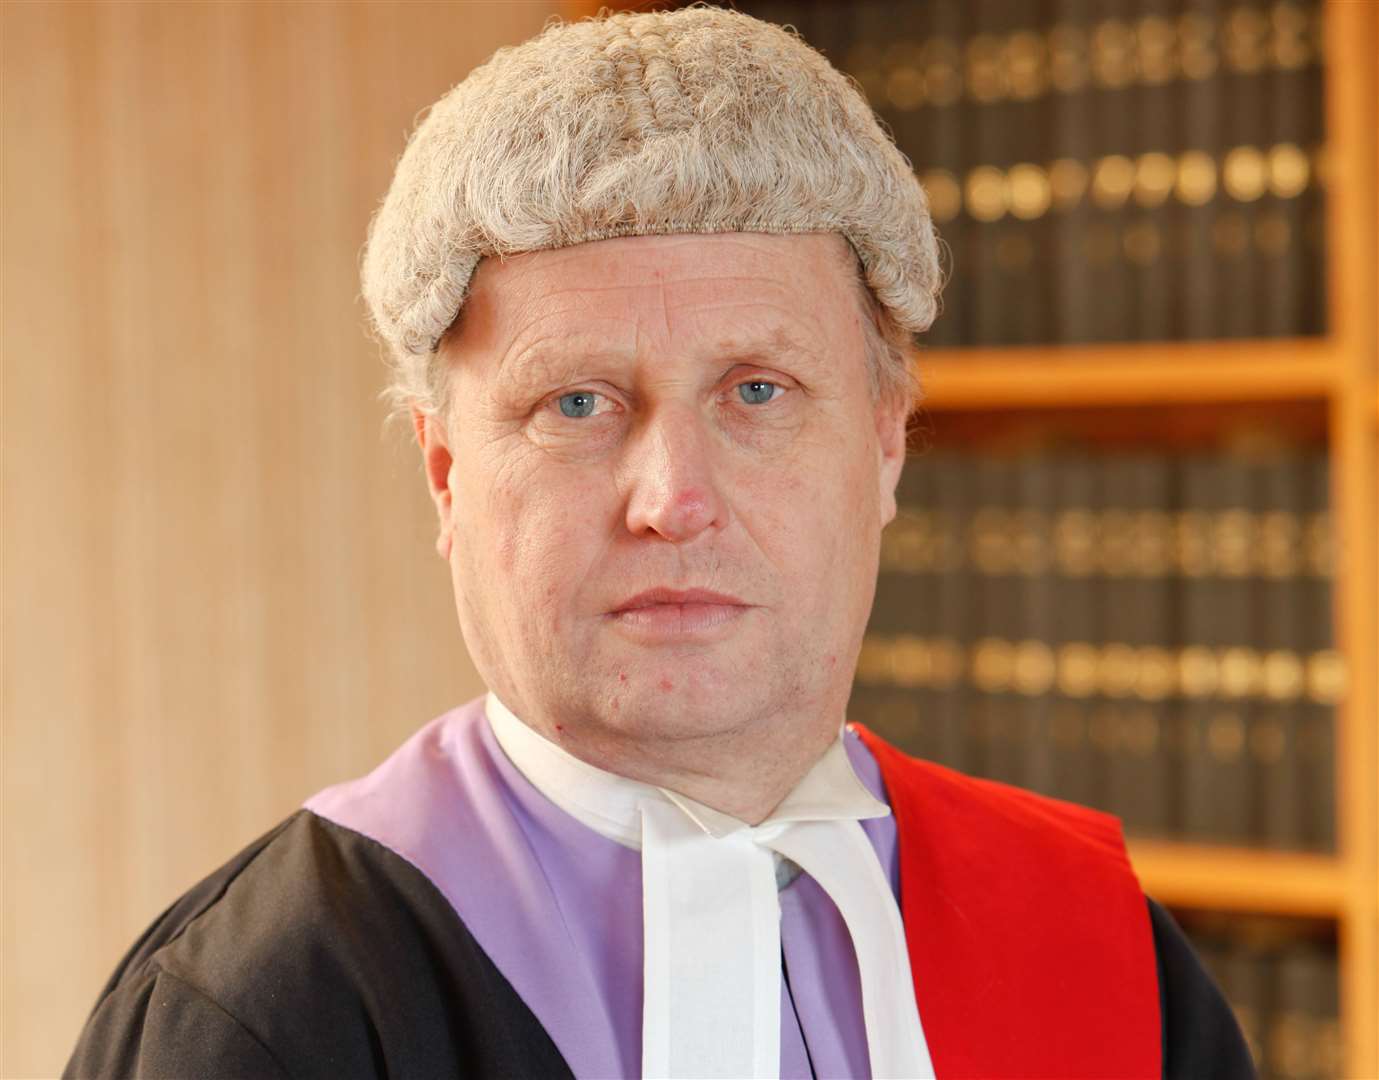 Judge Philip St John-Stevens gave Turner a six-month jail sentence suspended for 18 months